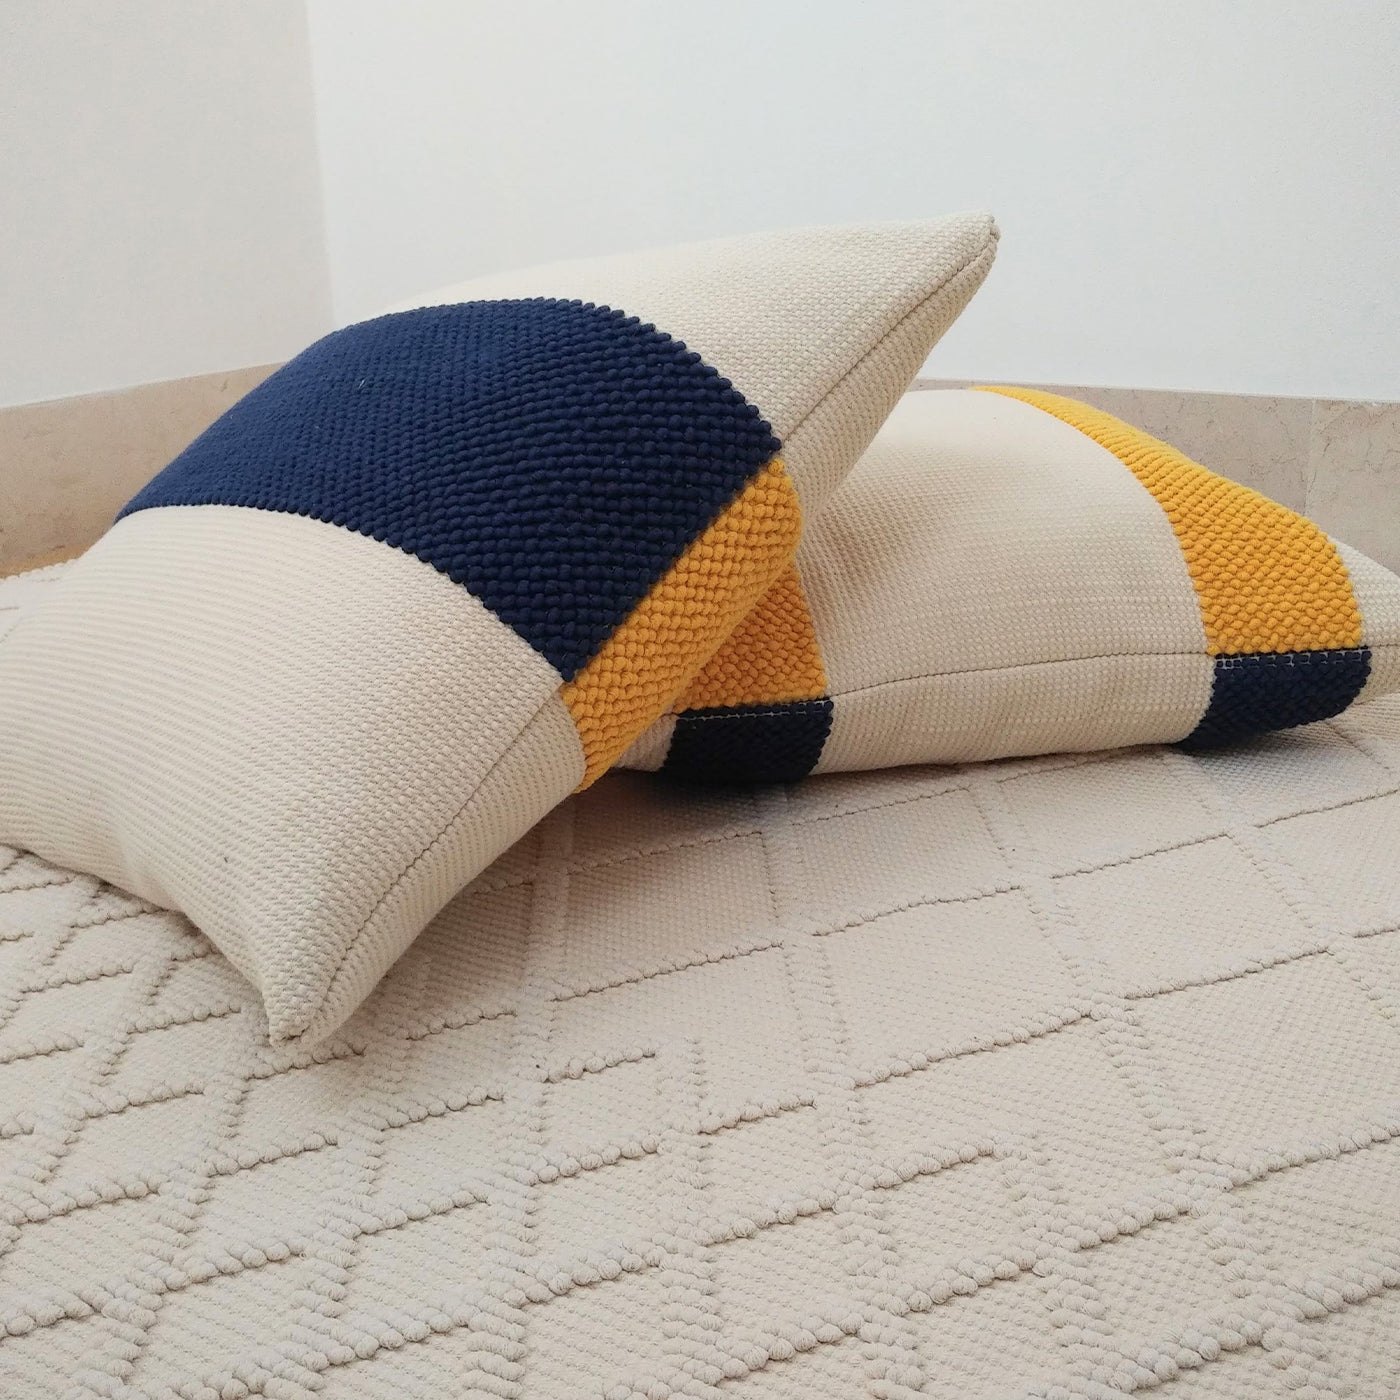 Ecru, Blue, and Yellow Cushion - Alternative view 1